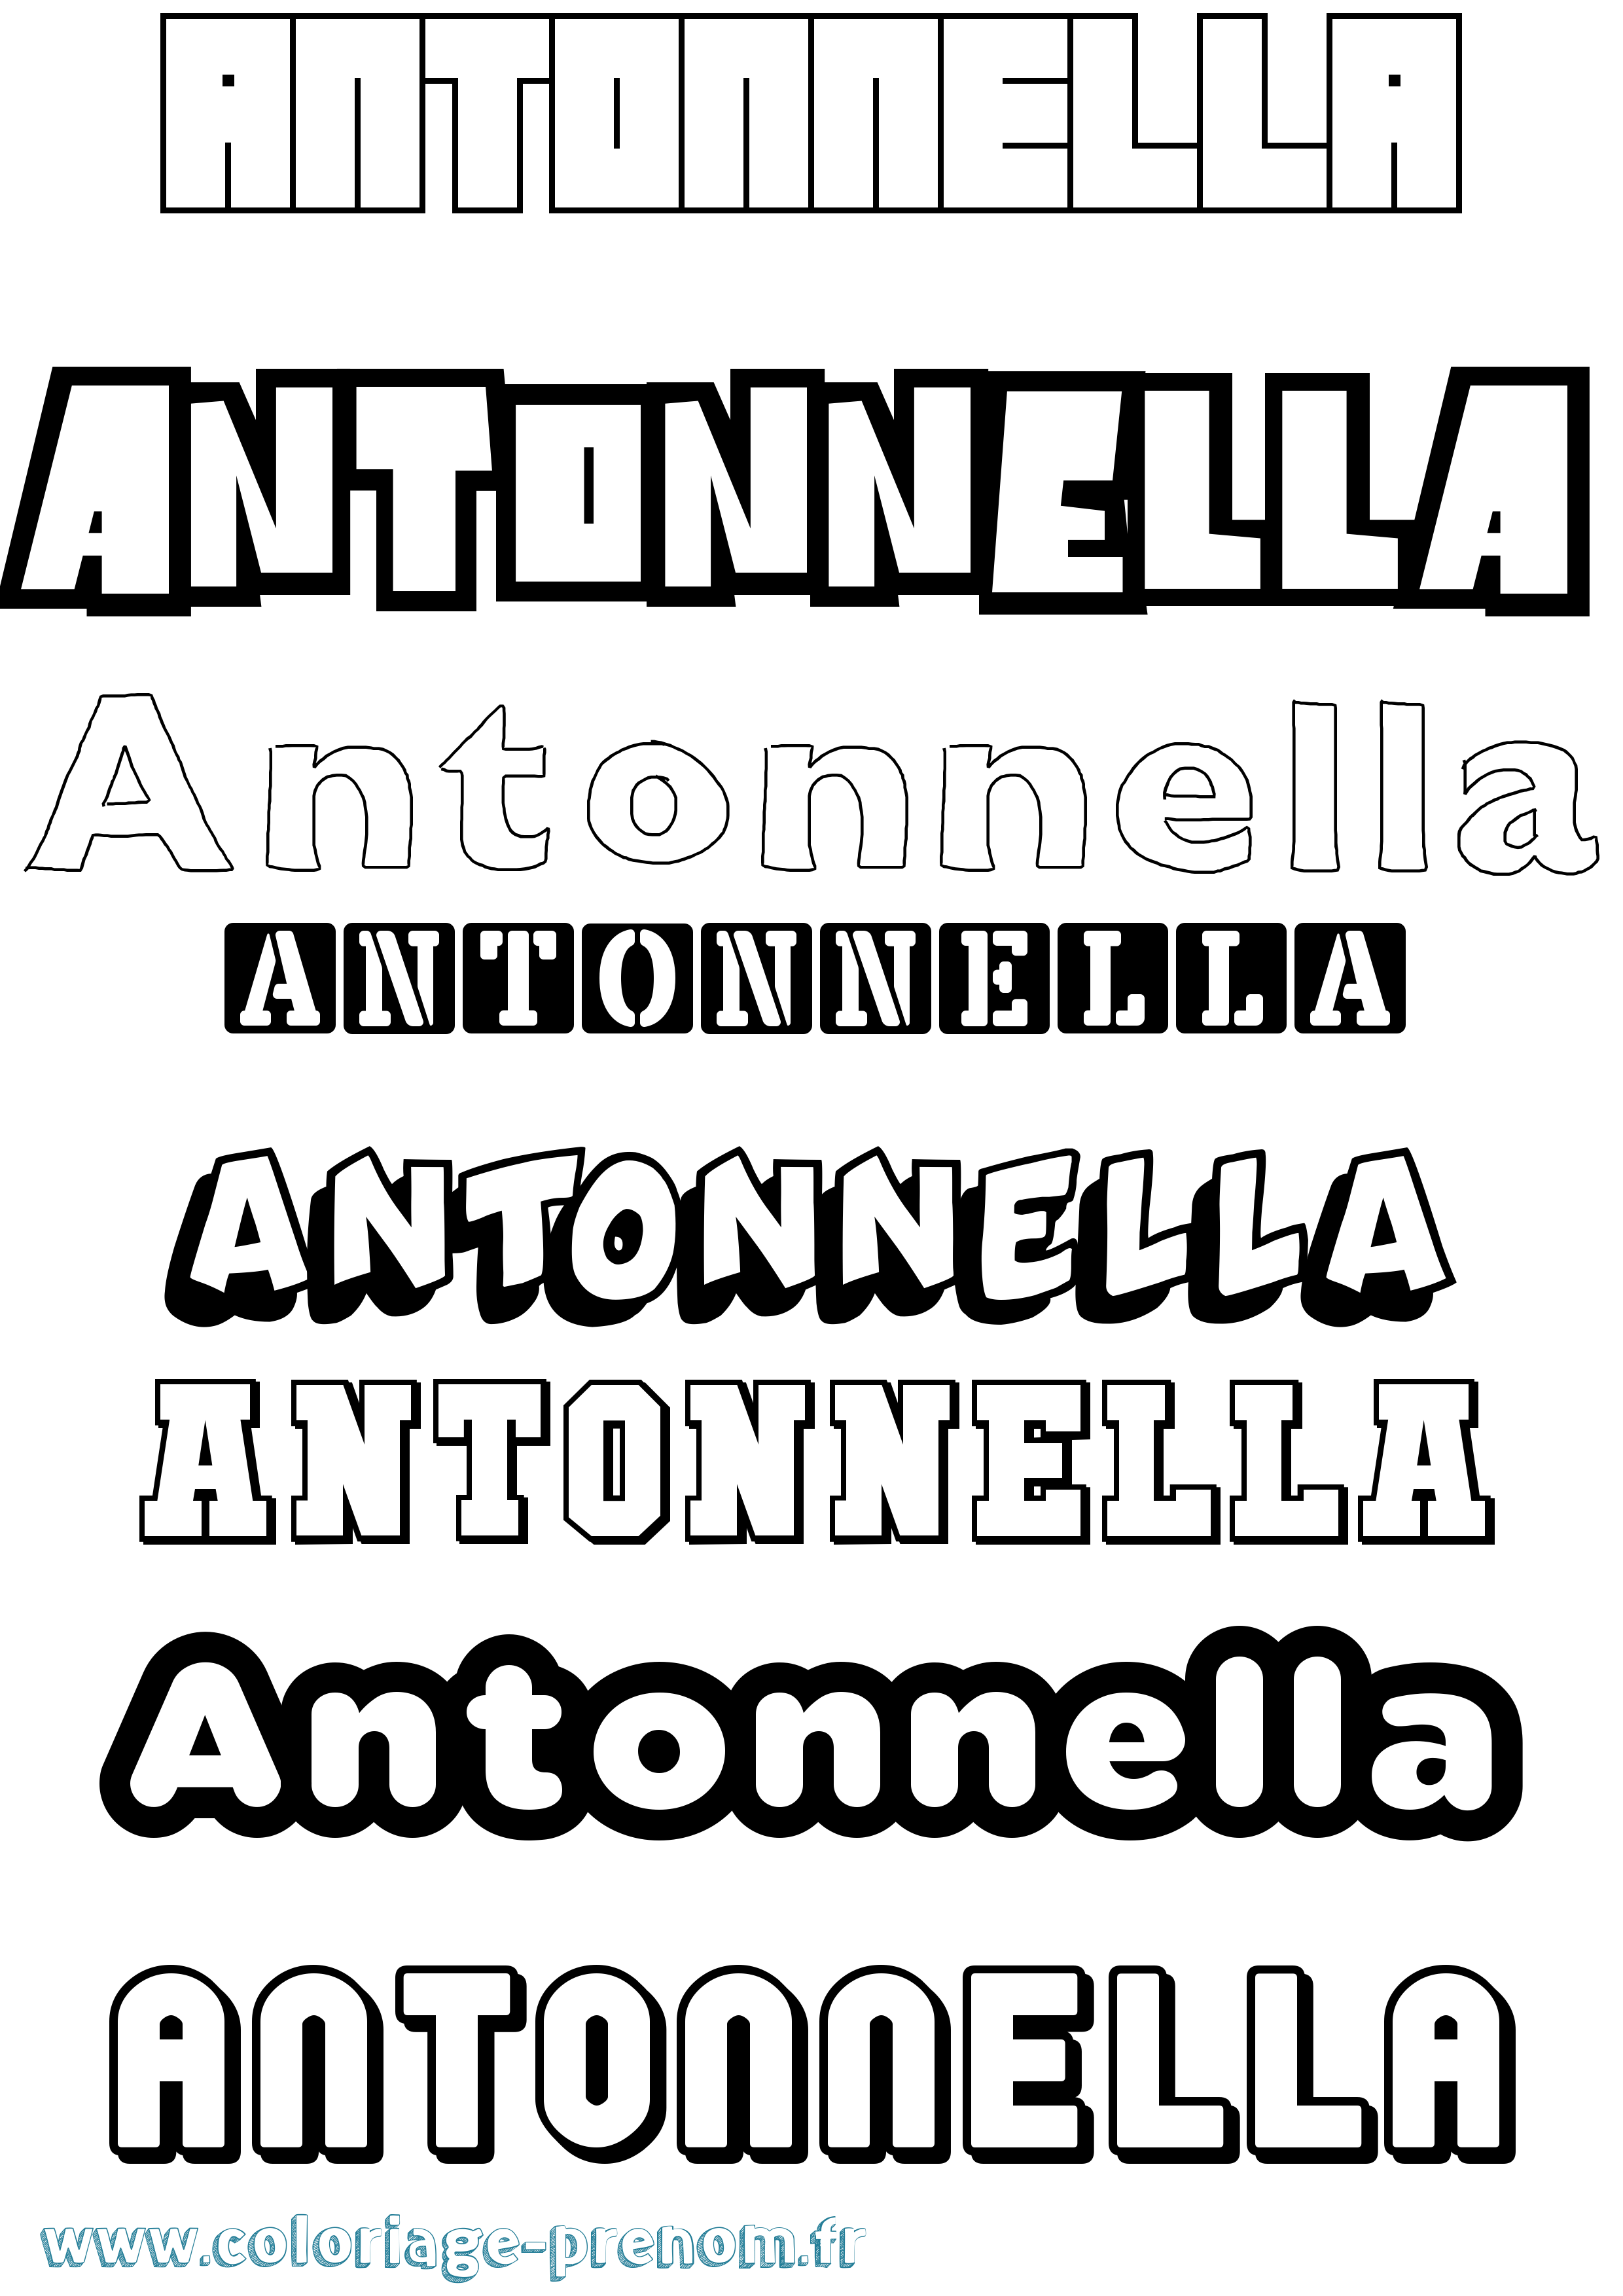 Coloriage prénom Antonnella Simple